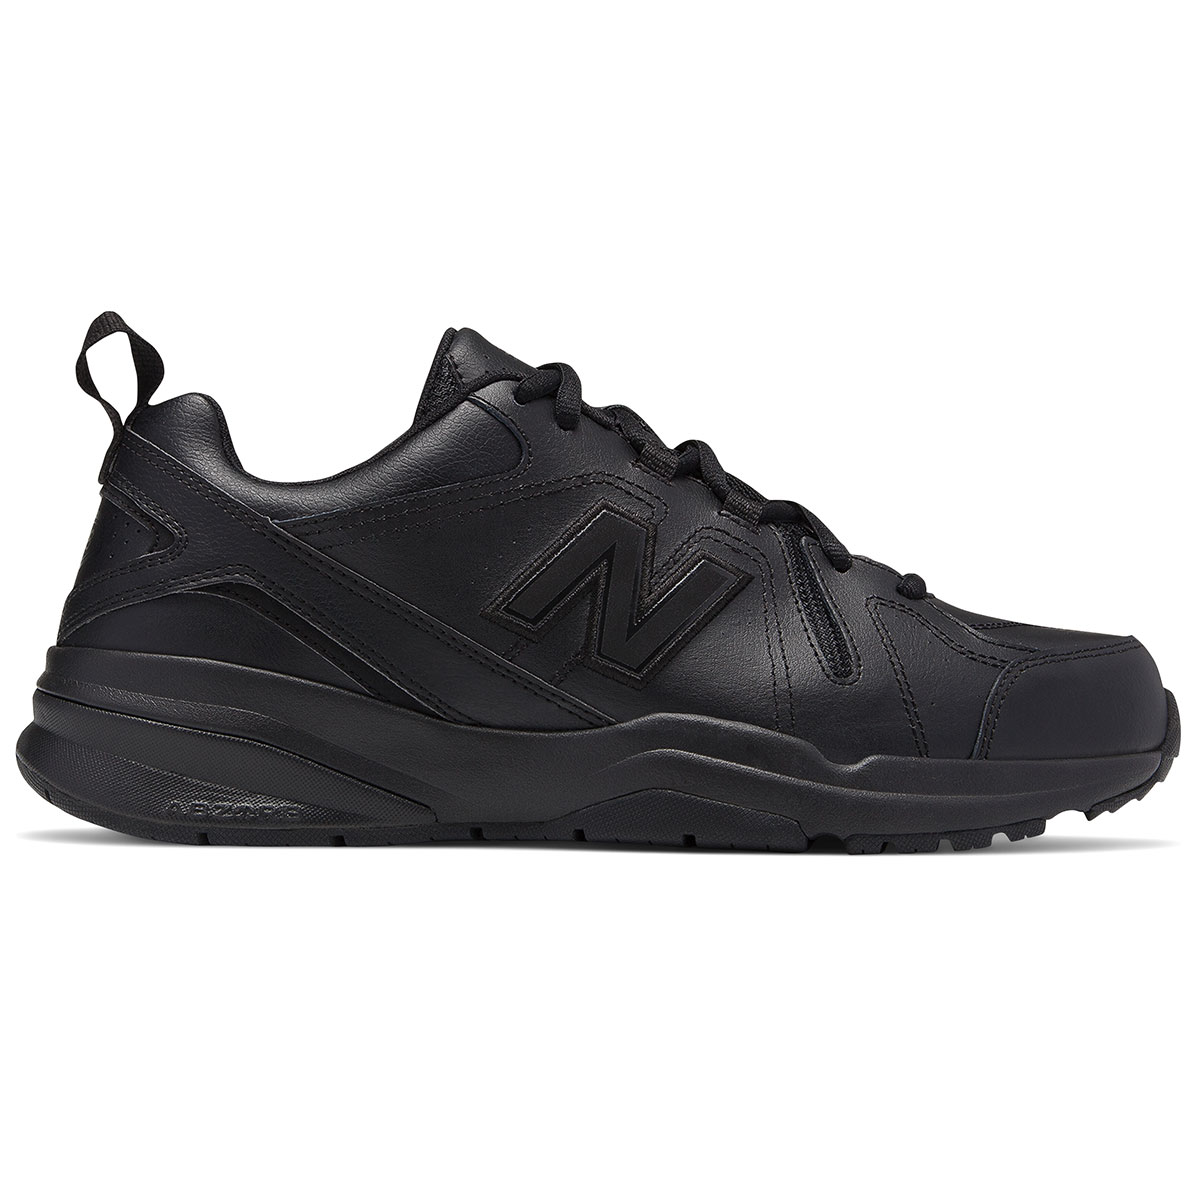 New Balance Men's 608V5 Training Shoes, Extra Wide - Black, 9